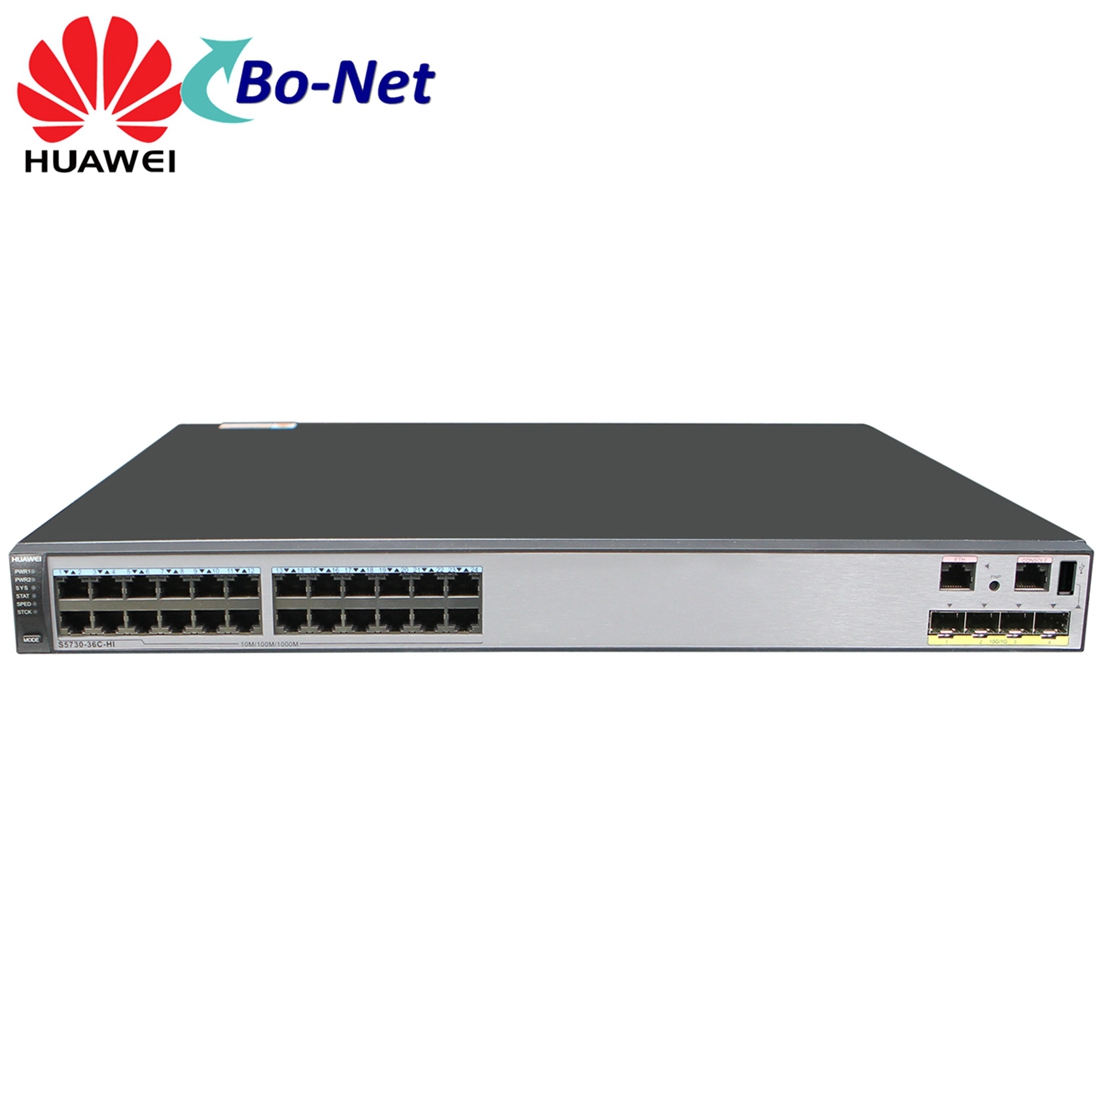 Huawei S5730-36C-HI S5730-HI Switch 24 Gigabit ports, 10 GE uplink ports